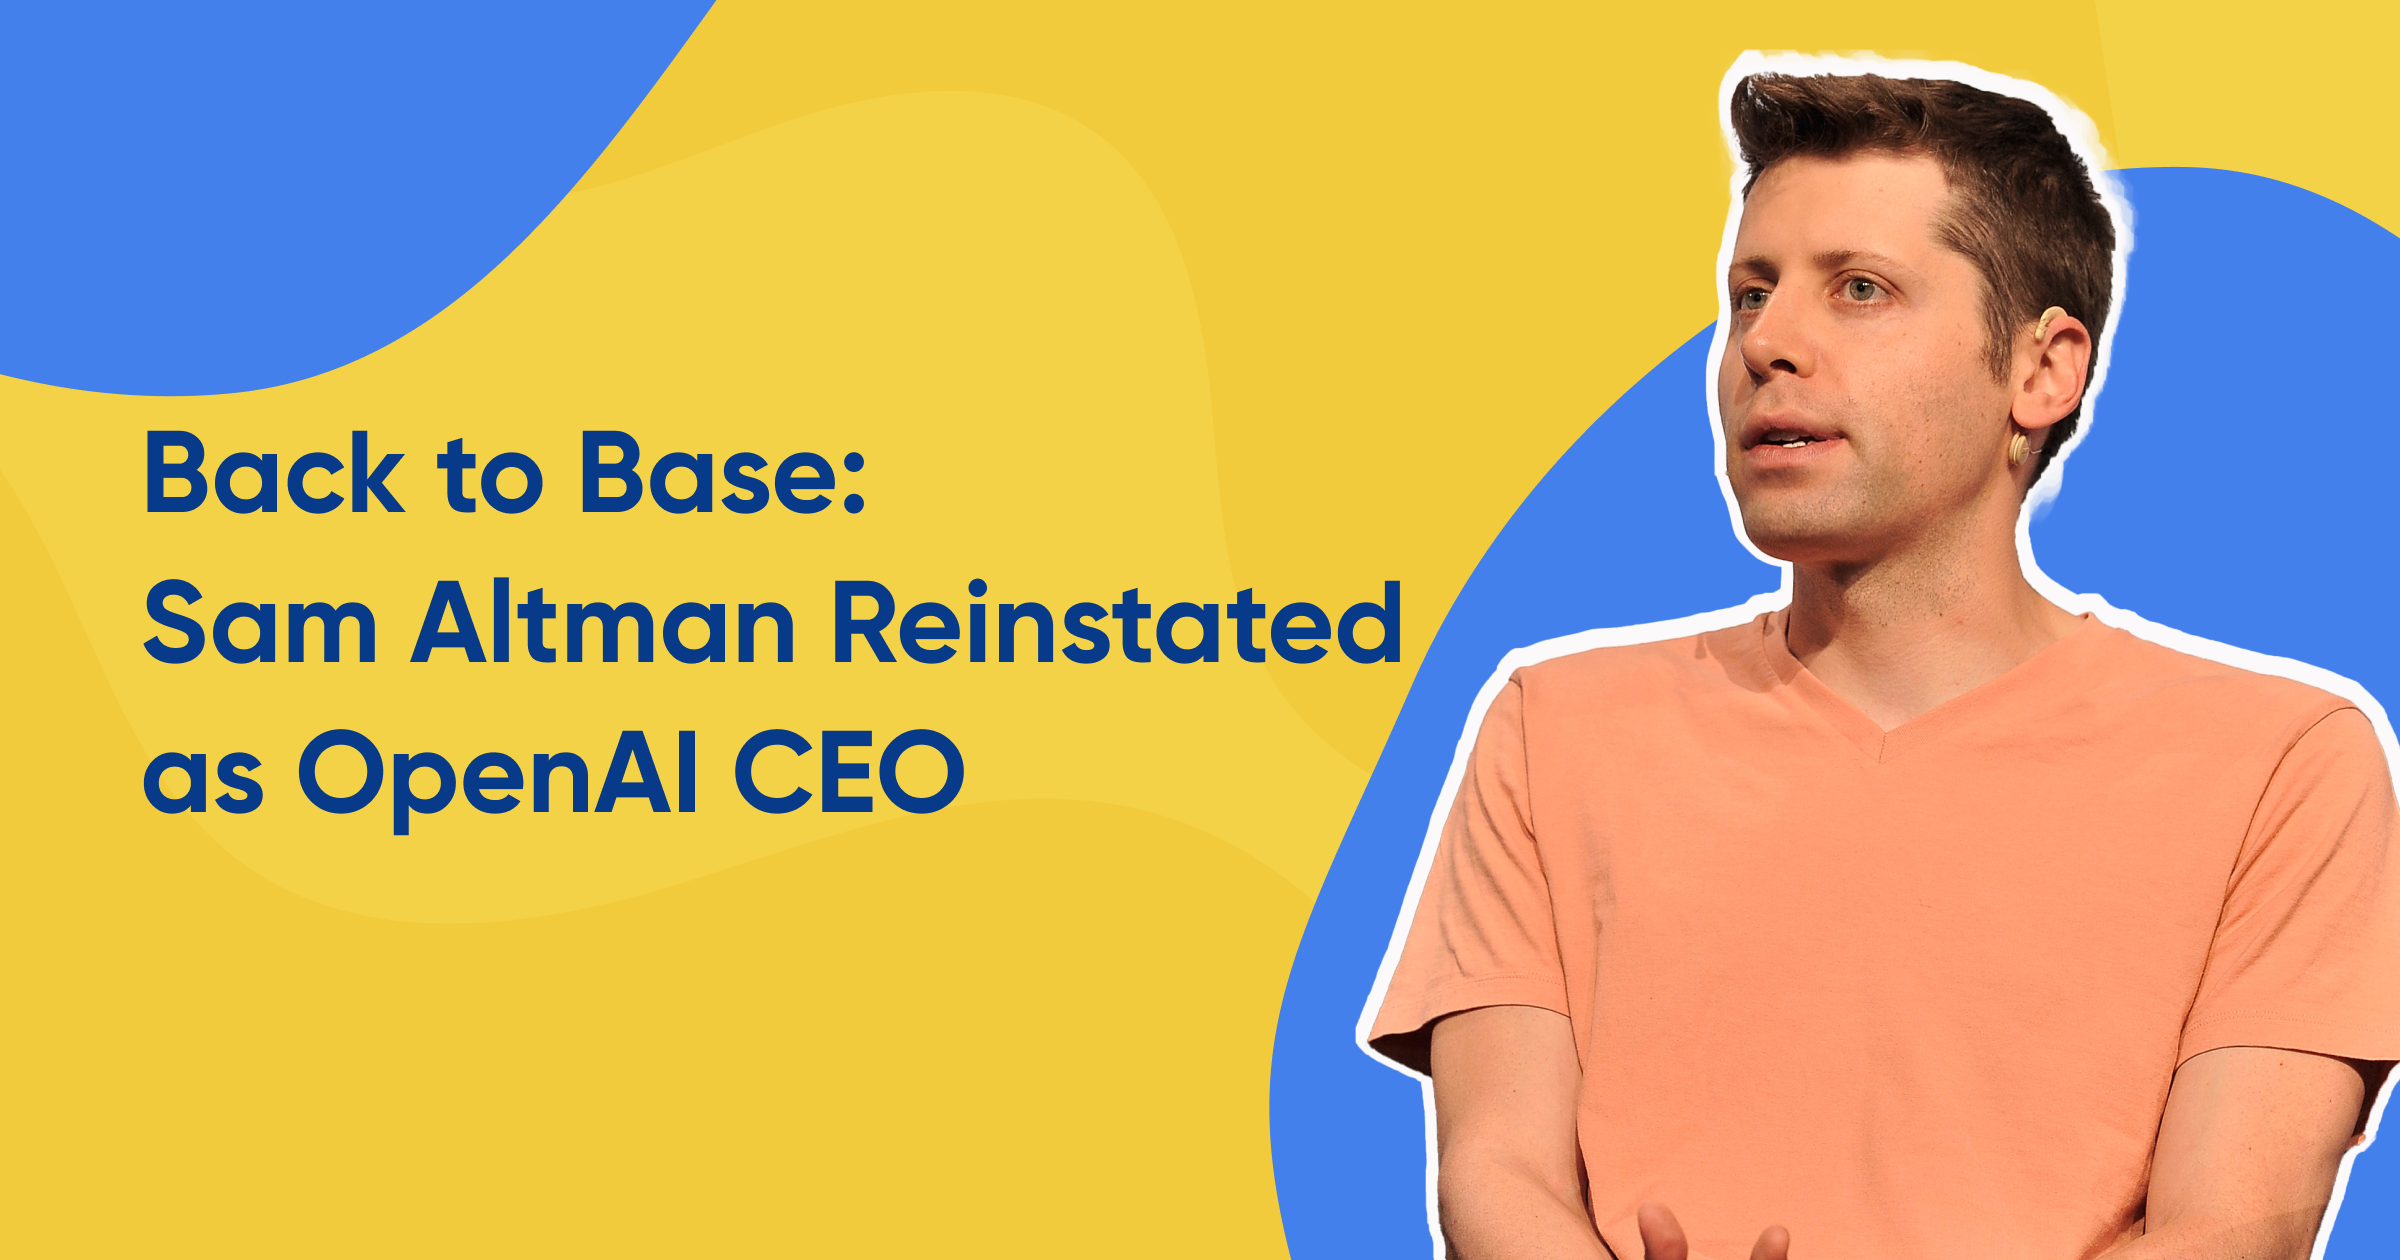 Back to Base: Sam Altman Reinstated as OpenAI CEO